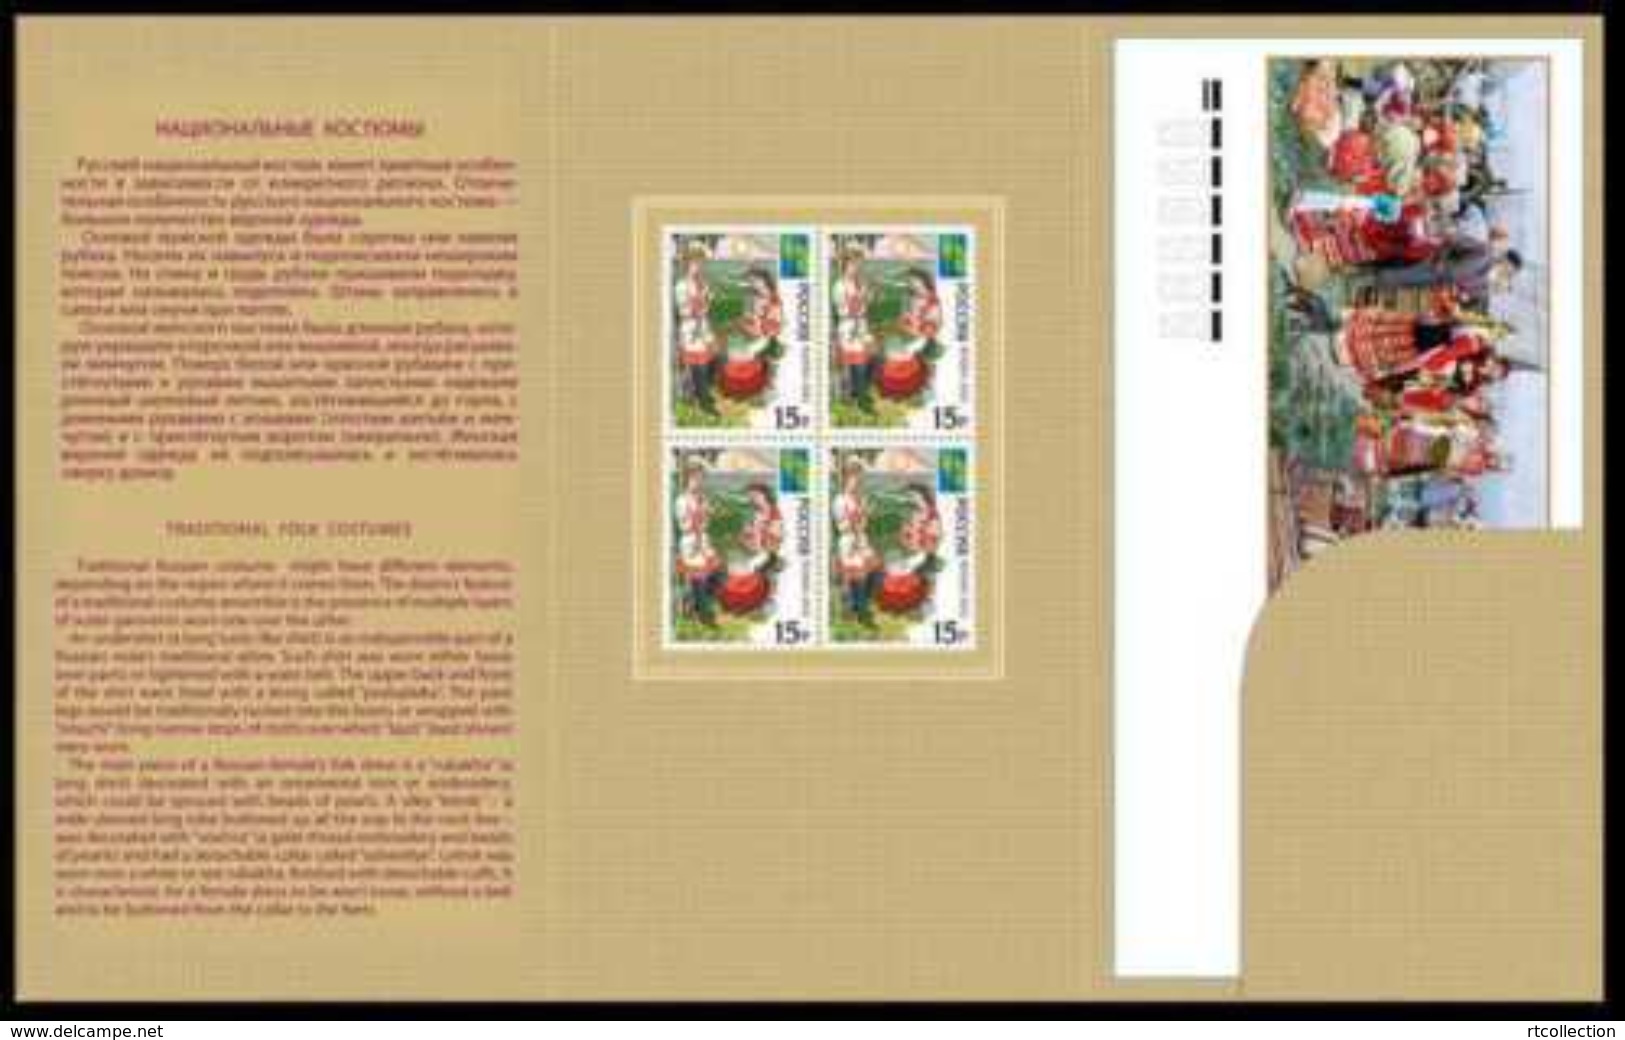 Russia 2012 Souvenir Pack Booklet Block Of 4 Stamps & FDC Art Folk Custumes Cloth Cultures Dress Joint Issue RCC Member - Sammlungen